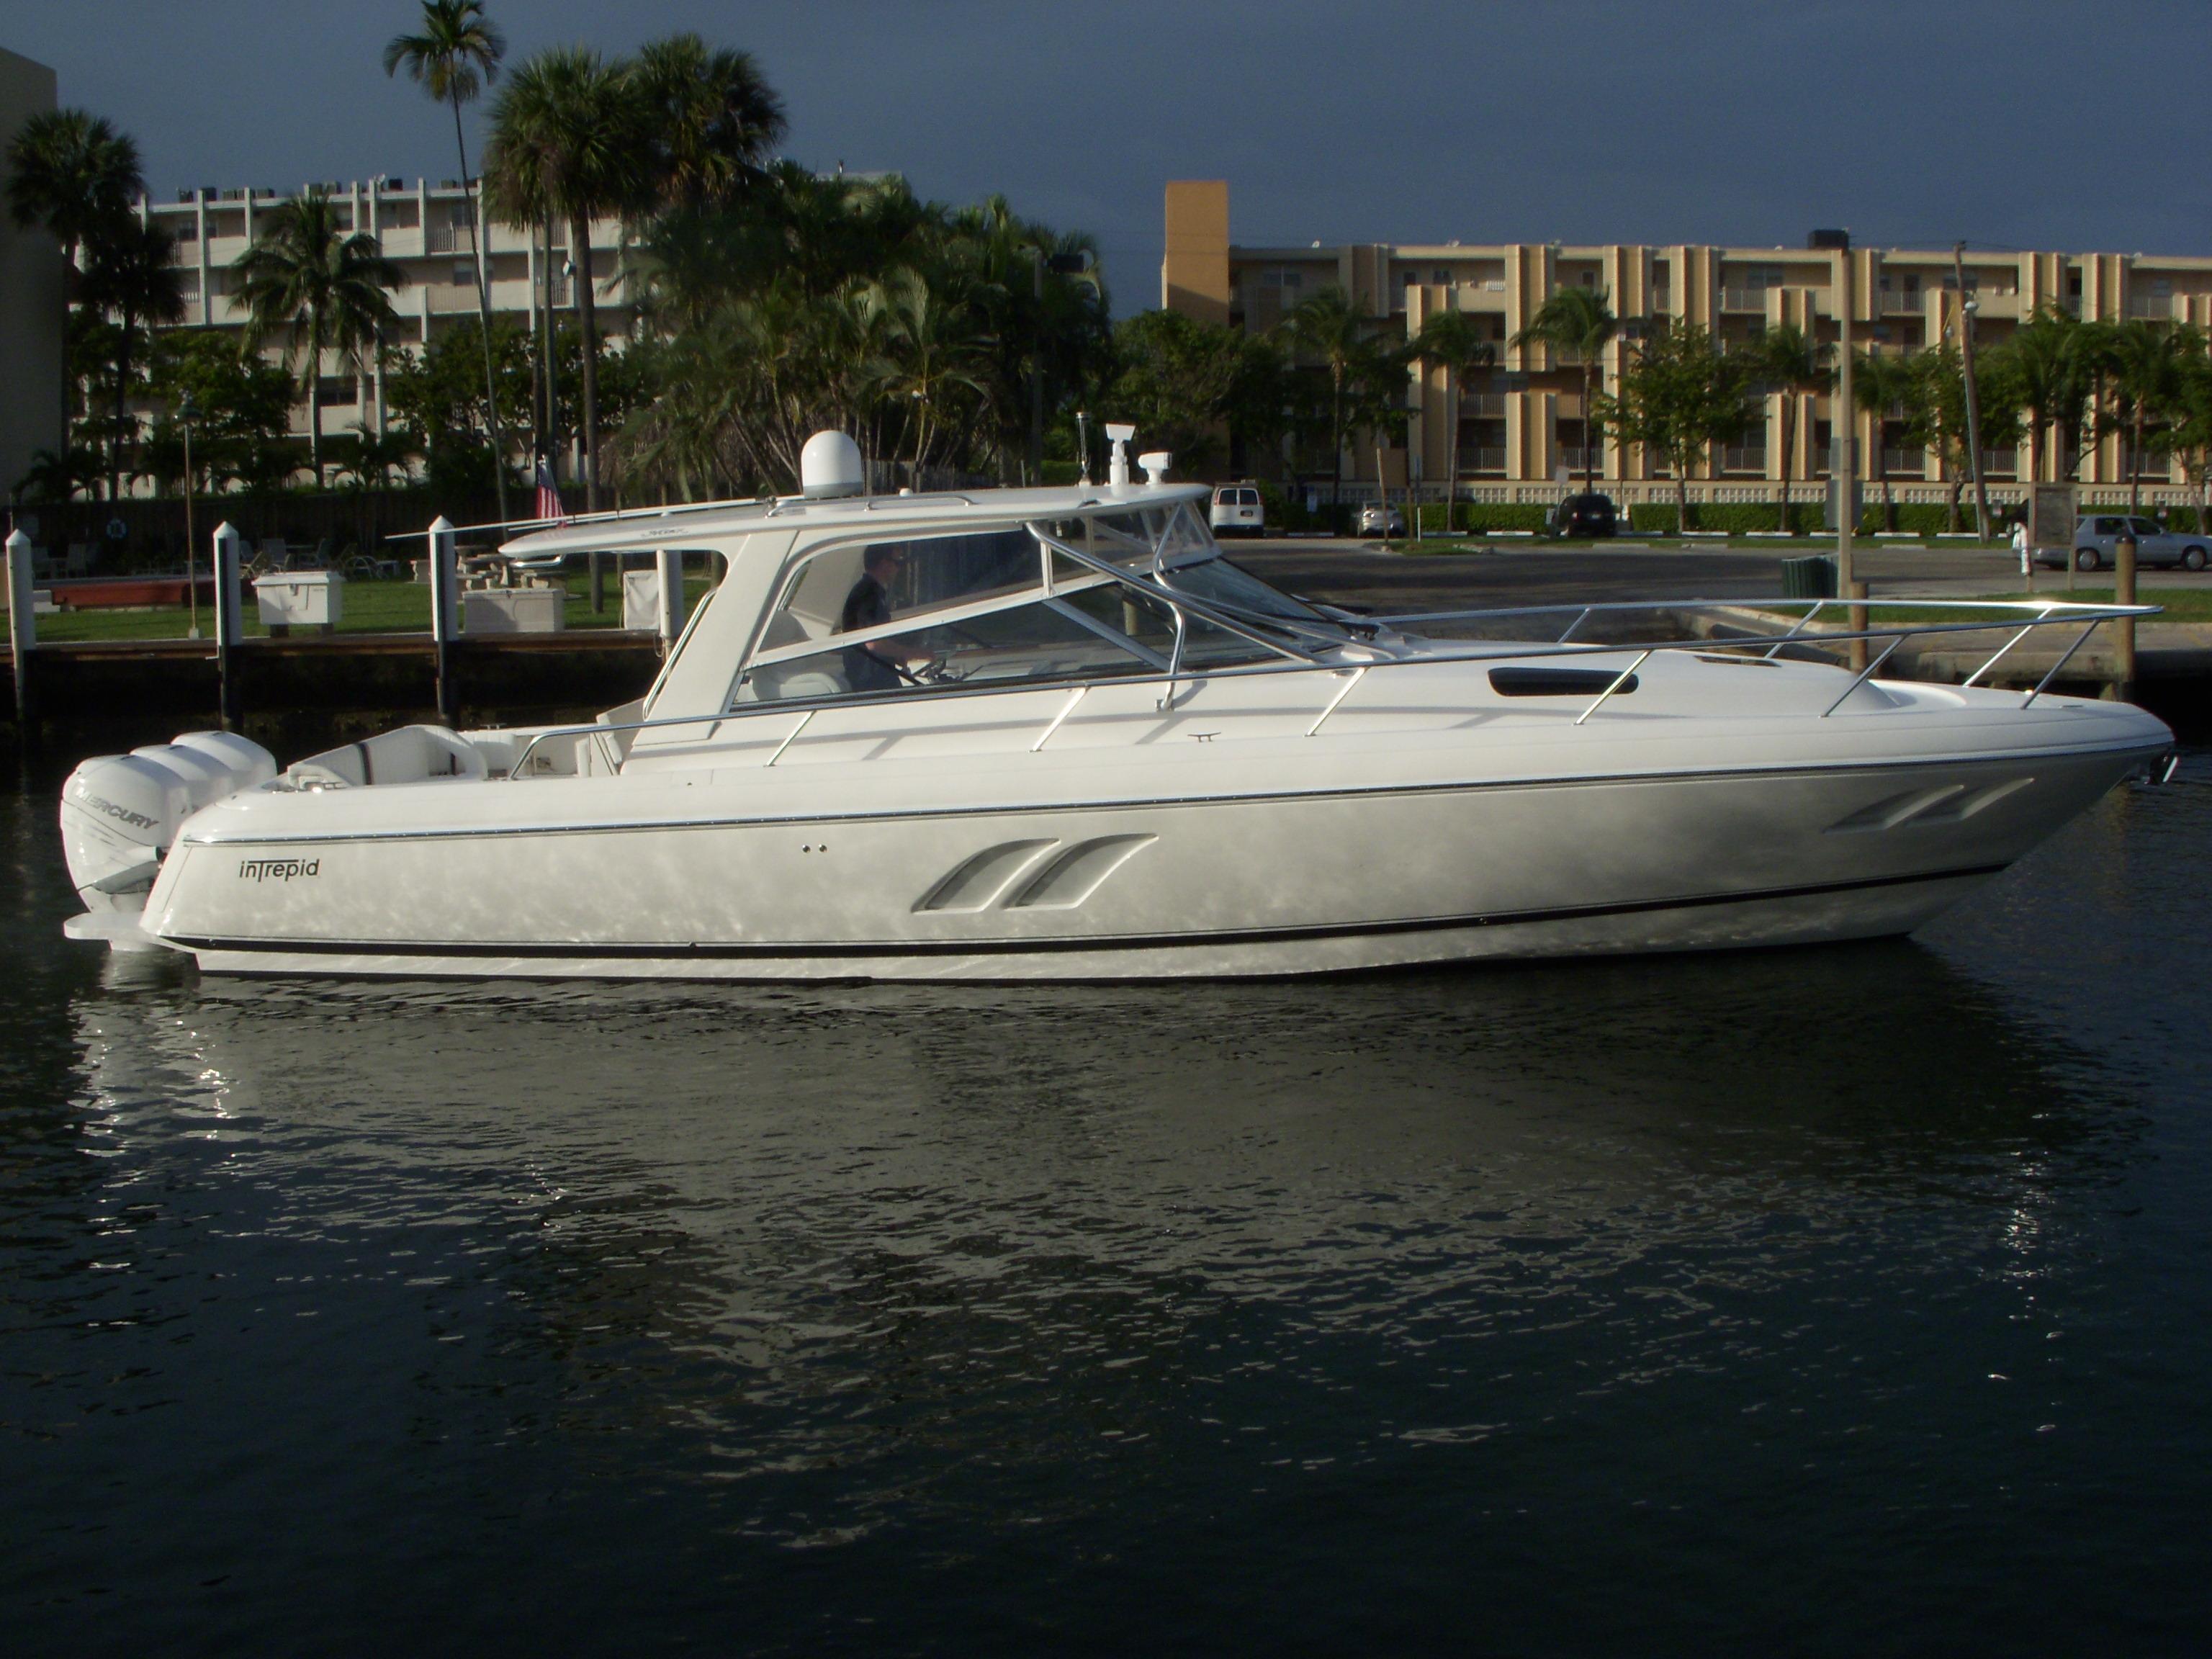 Intrepid 430 Sport Yacht, Ft. Lauderdale